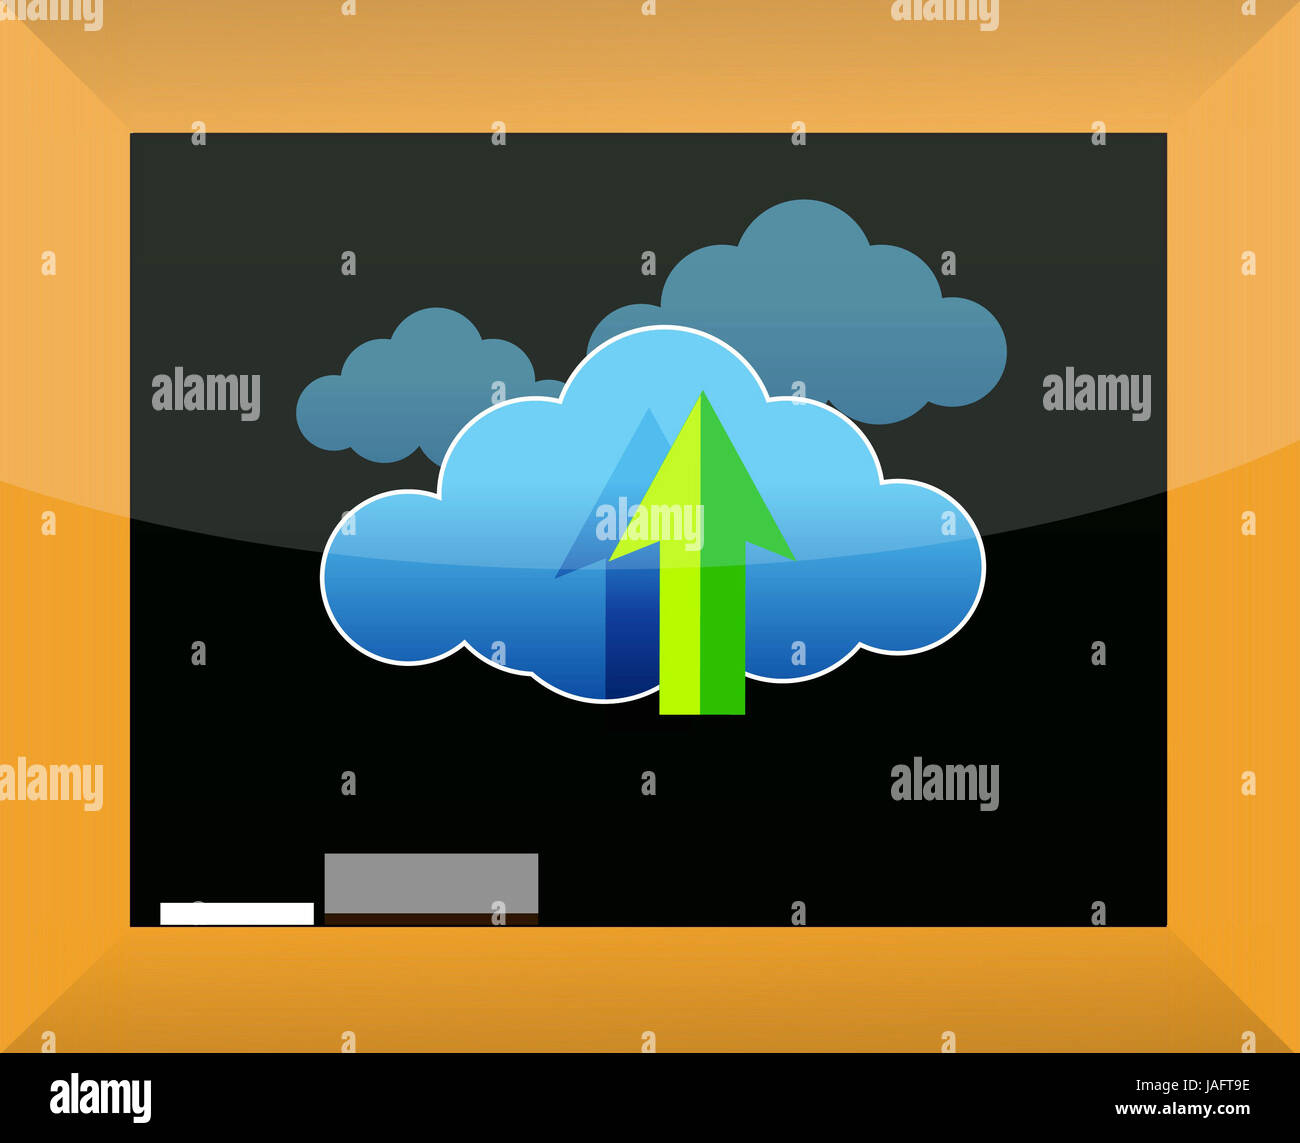 Cloud computing concept on a blackboard illustration Stock Photo